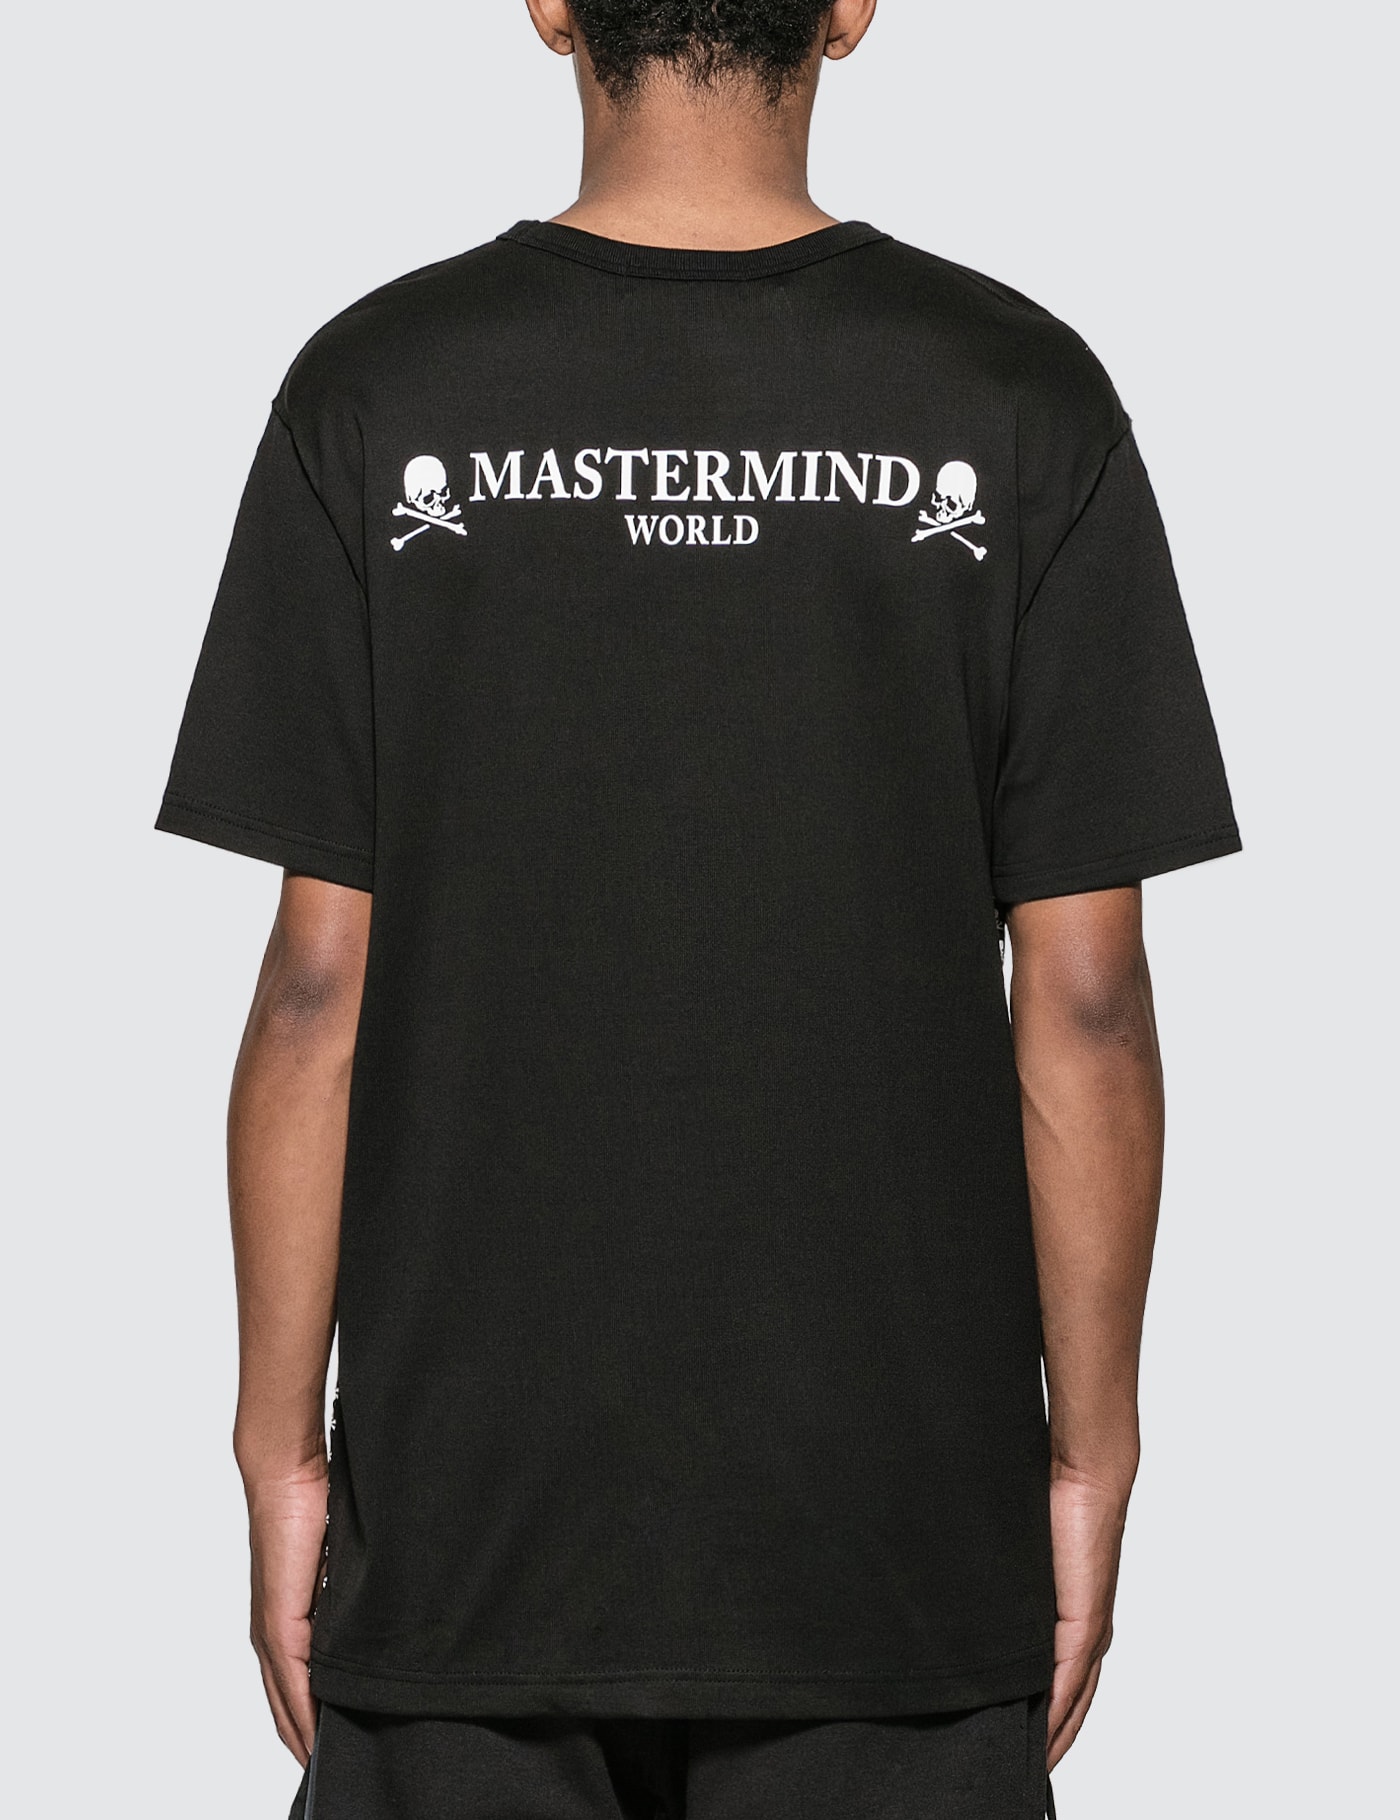 Mastermind World - Skull Stripe T-shirt | HBX